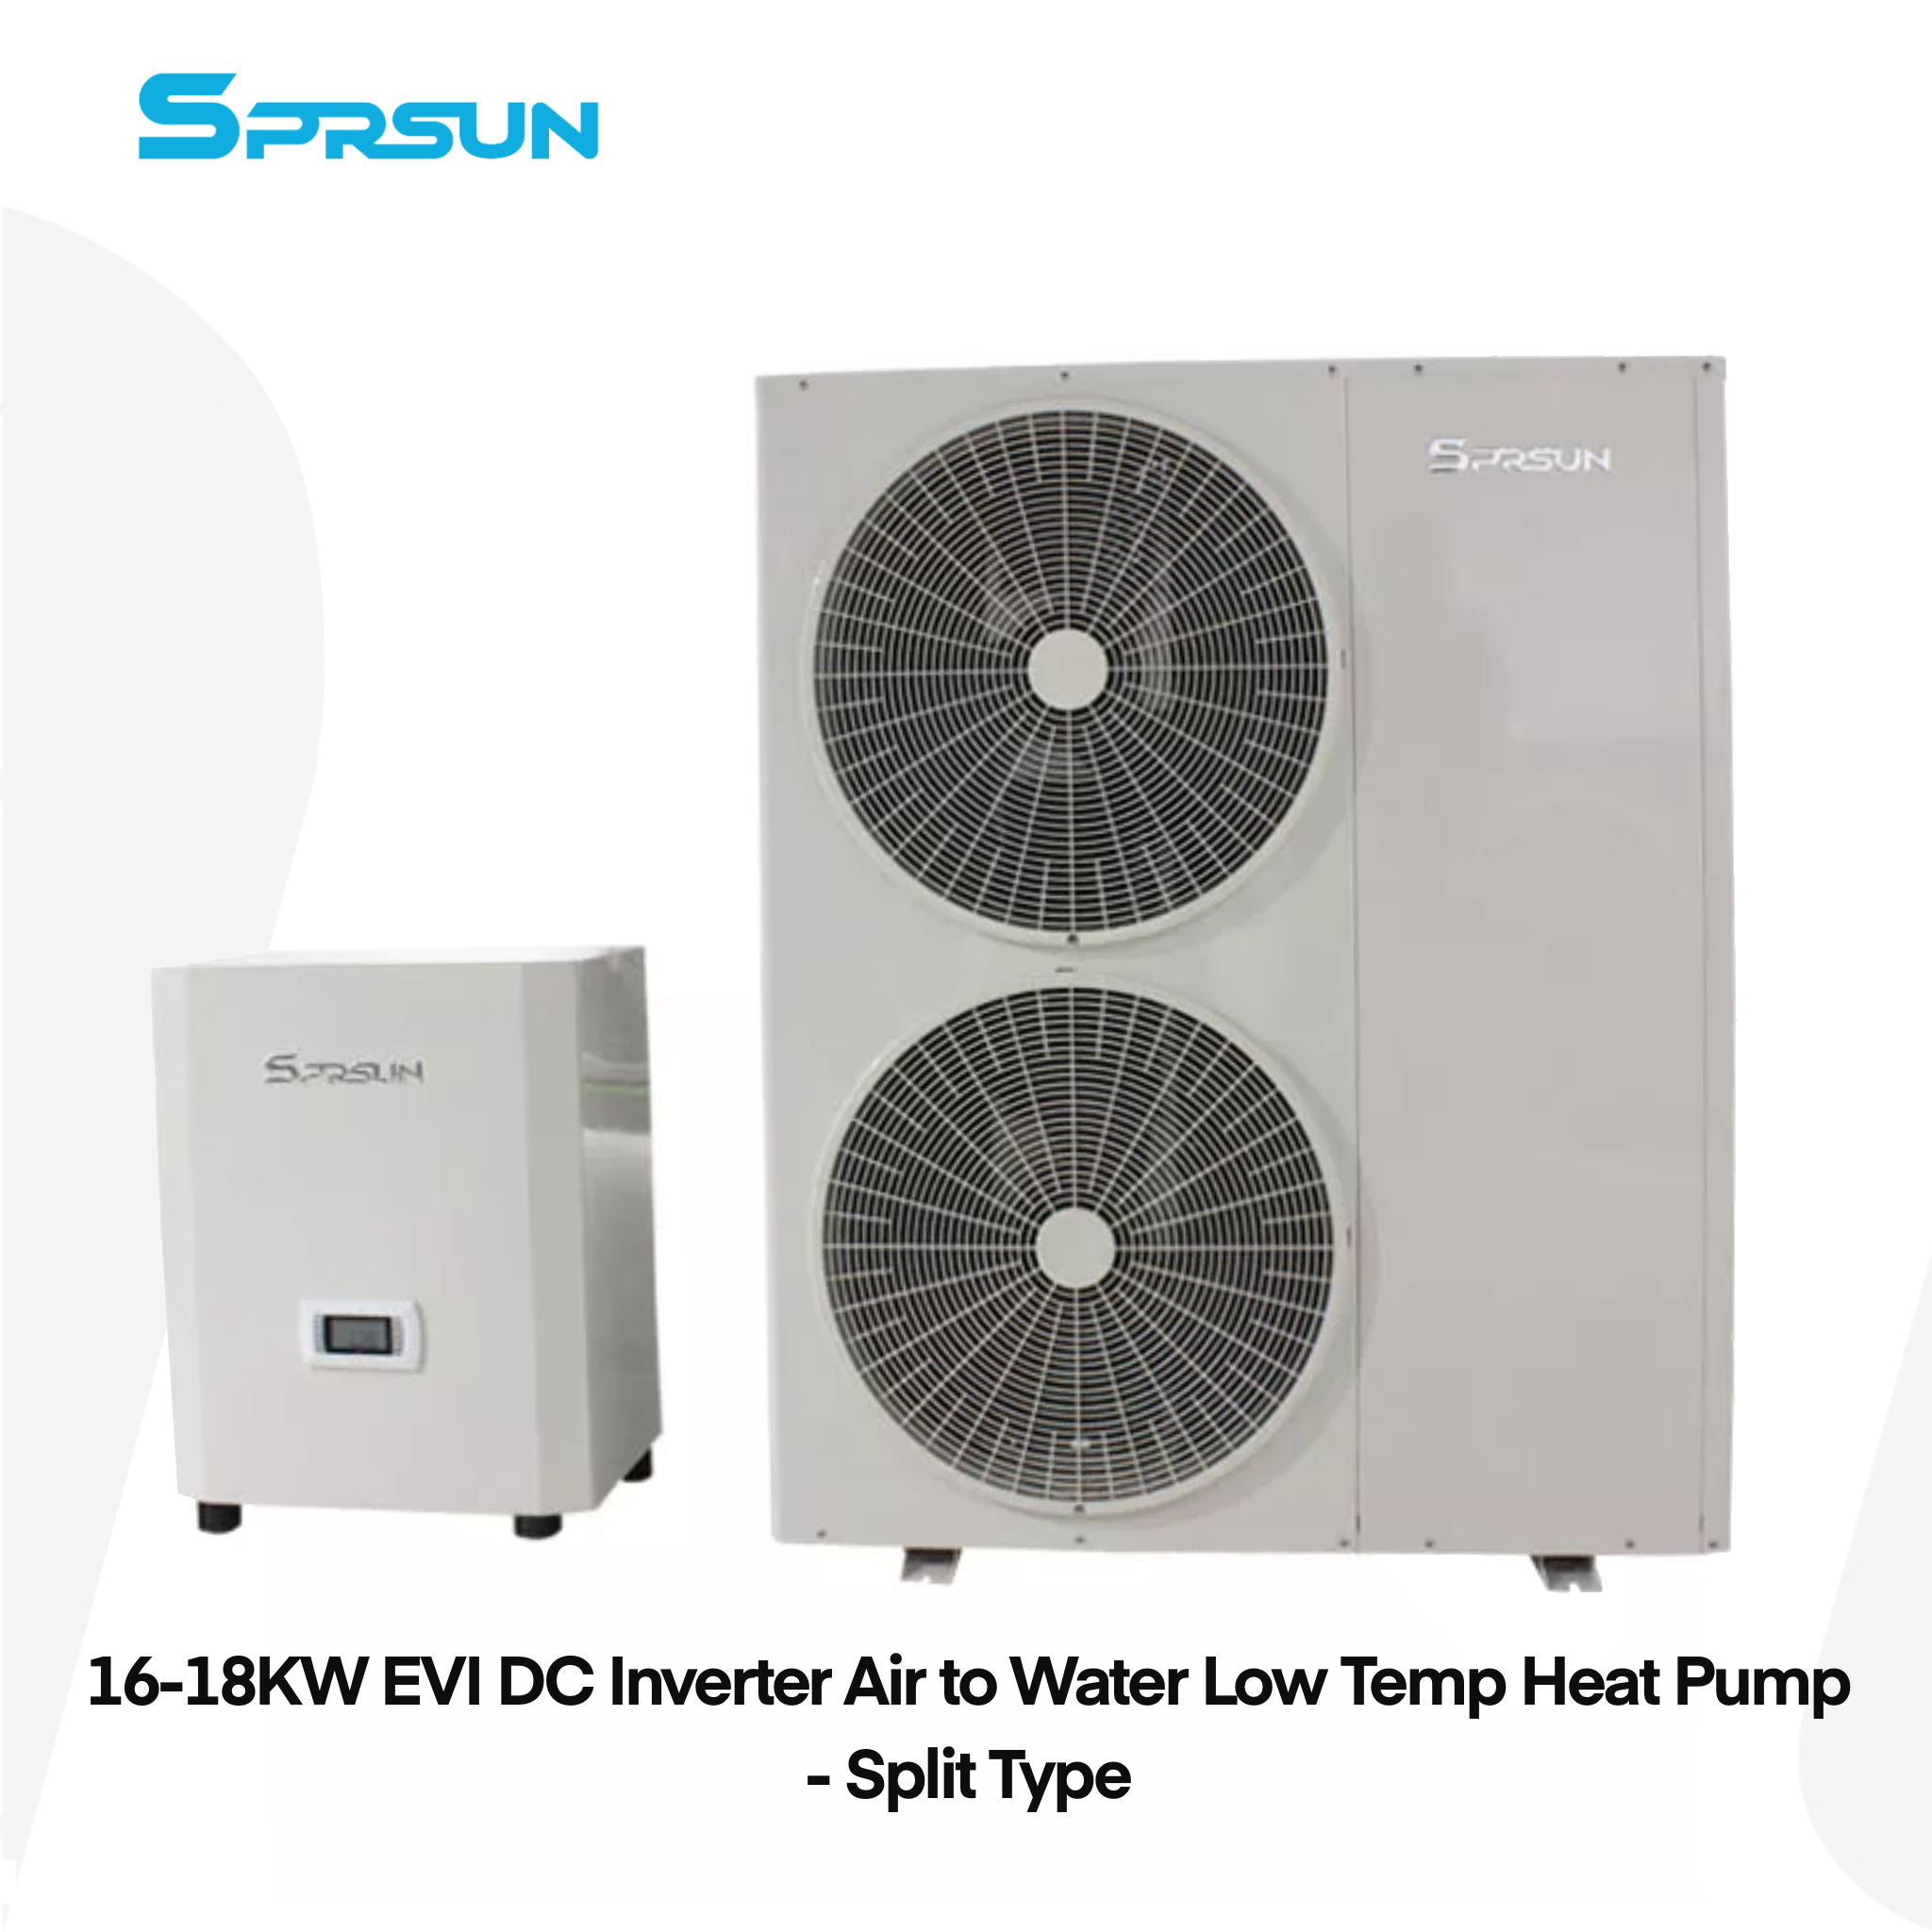 16-18KW EVI DC Inverter Air to Water Low Temp Heat Pump - Split Type